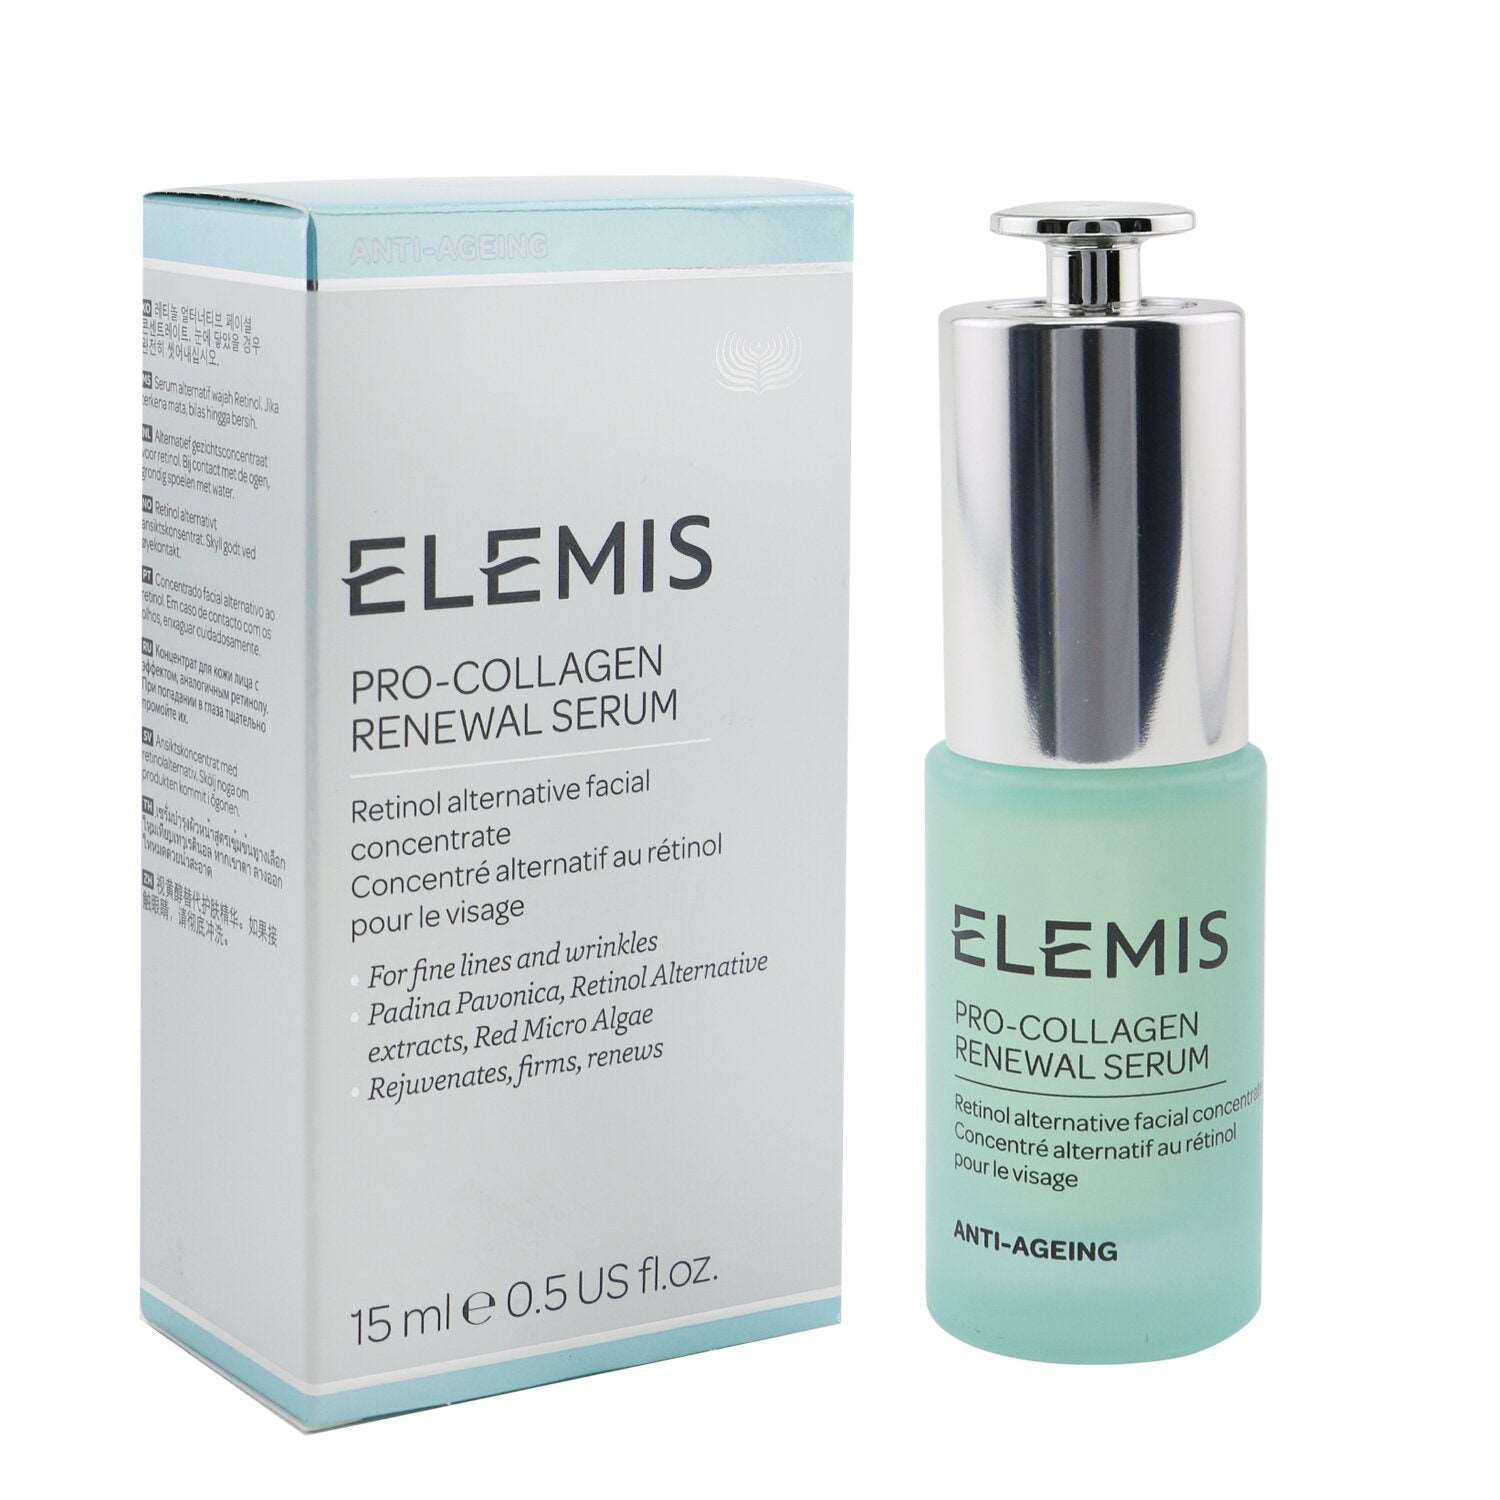 ELEMIS - Pro-Collagen Renewal Serum - 15ml/0.5oz~3P's Inclusive Beauty